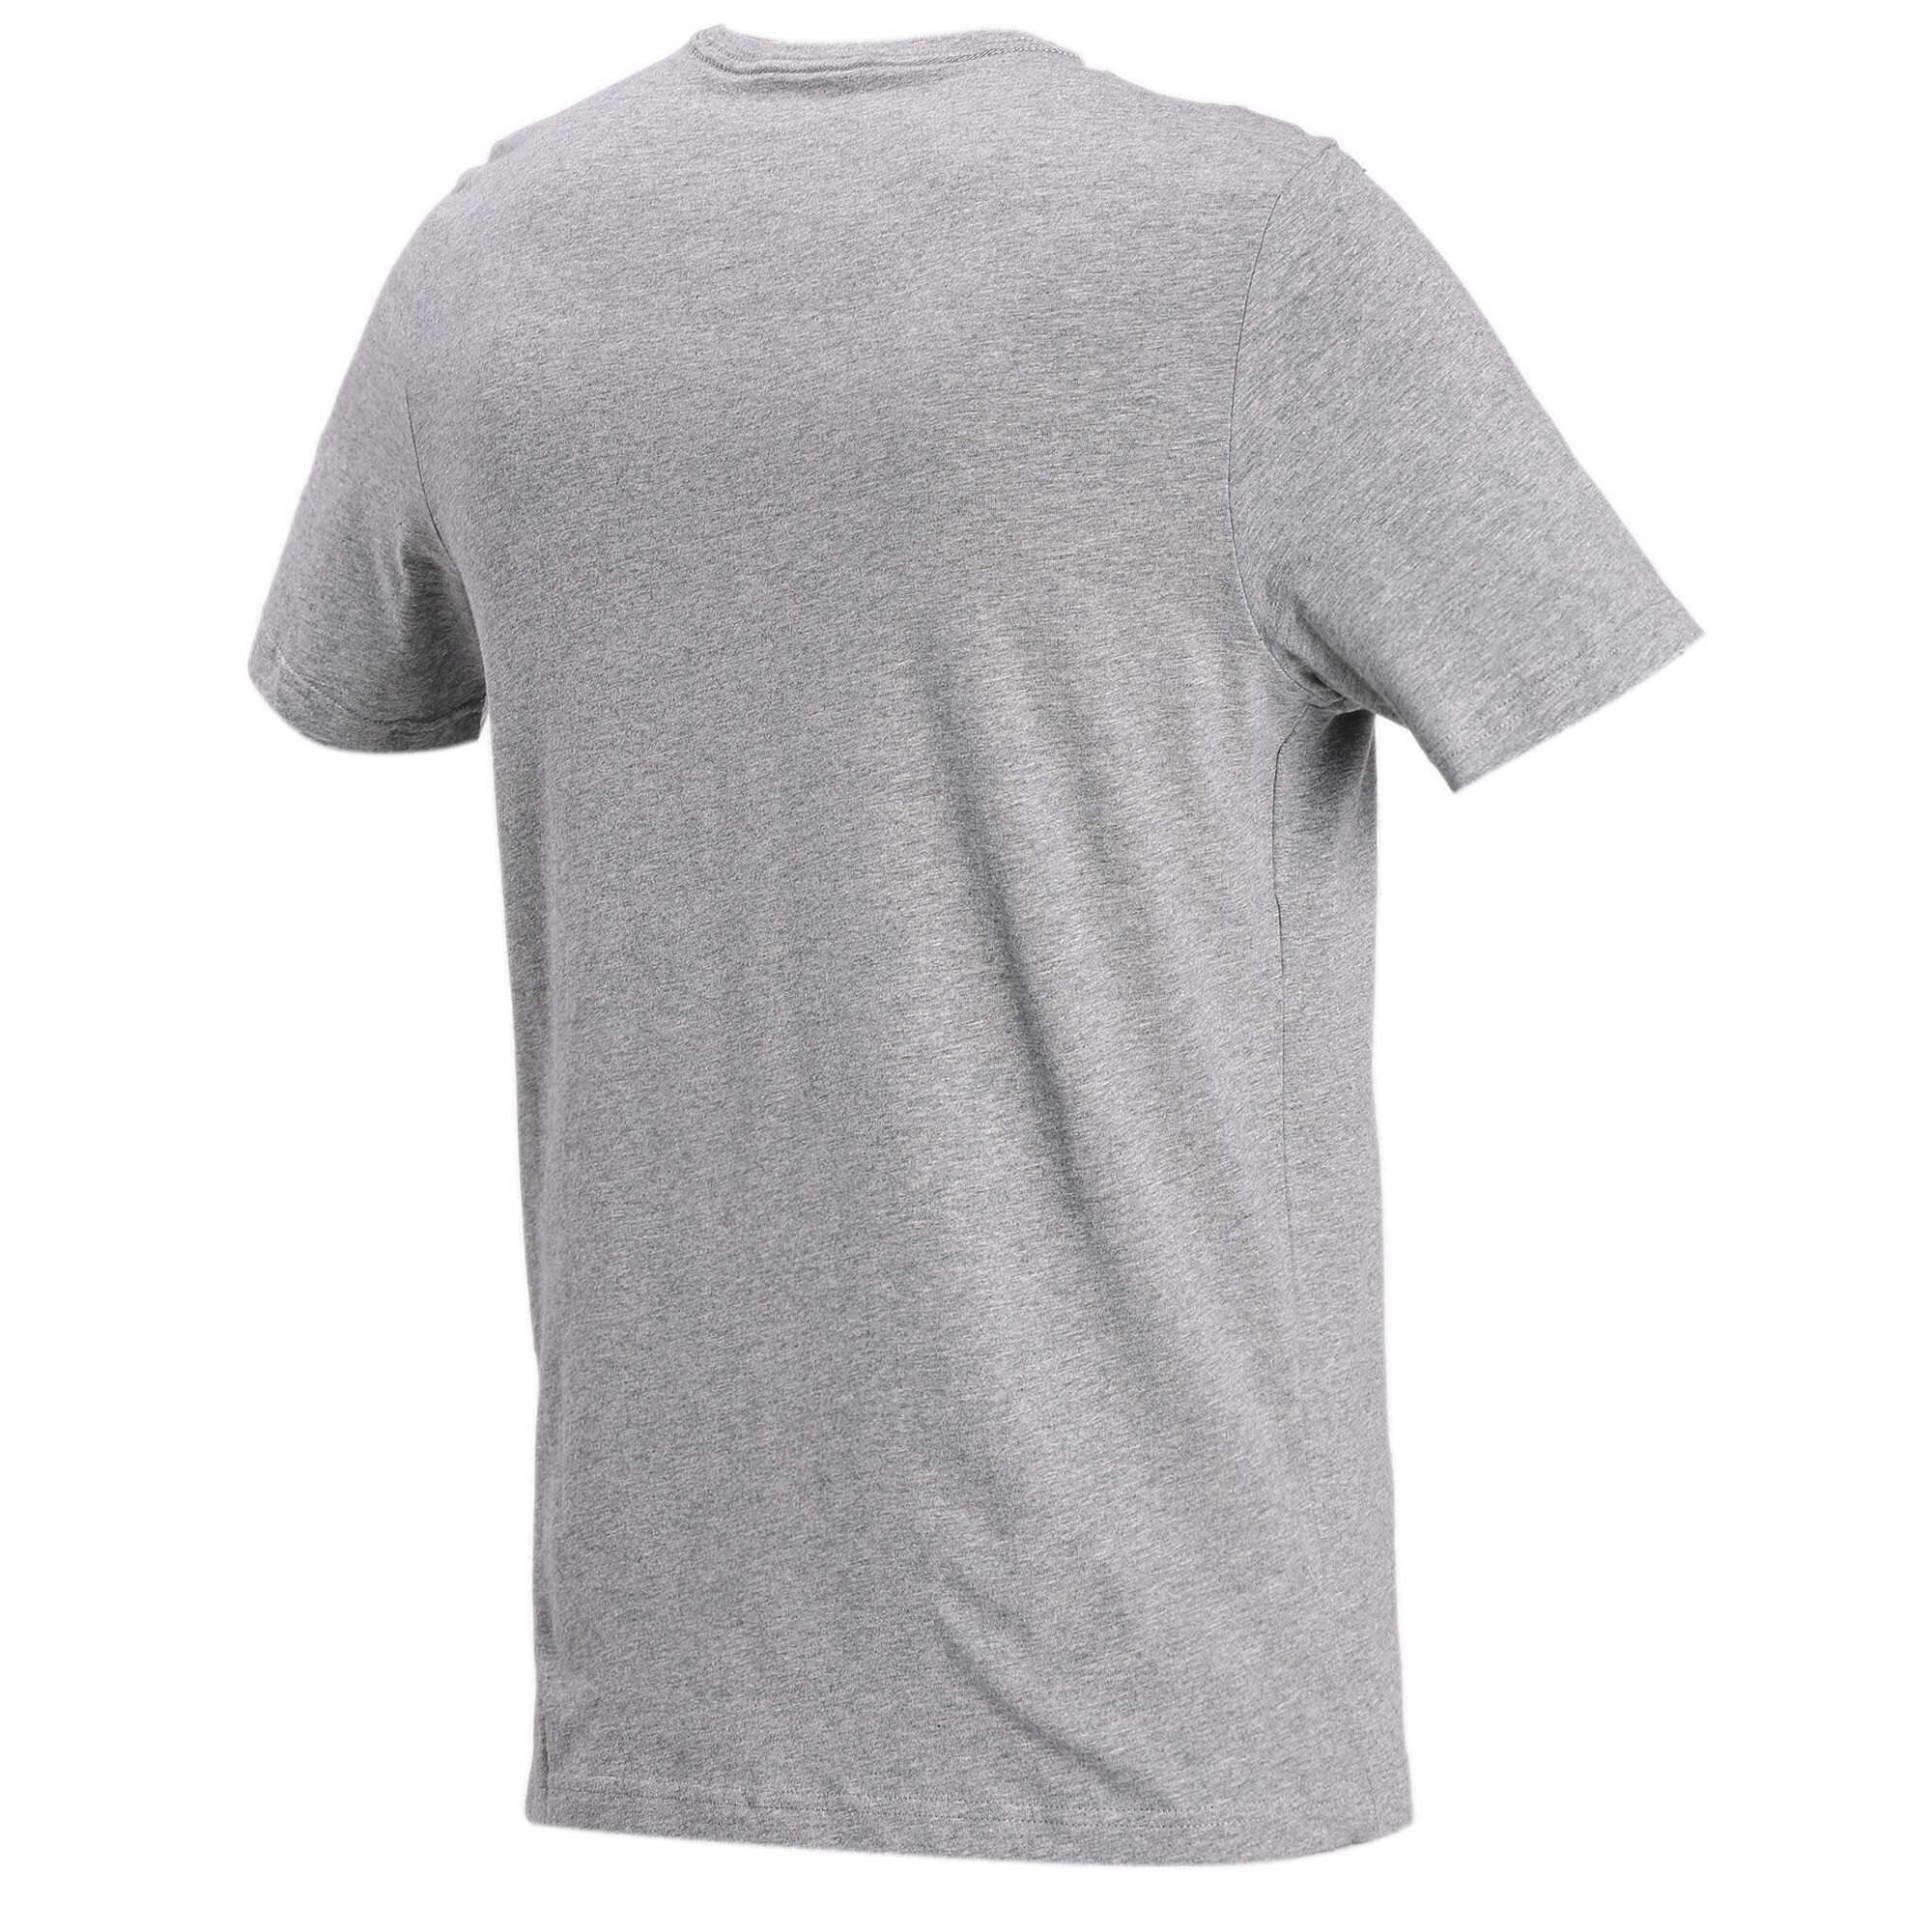 Men's Puma Essentials Small Logo T-Shirt, Gray, Size S, Clothing